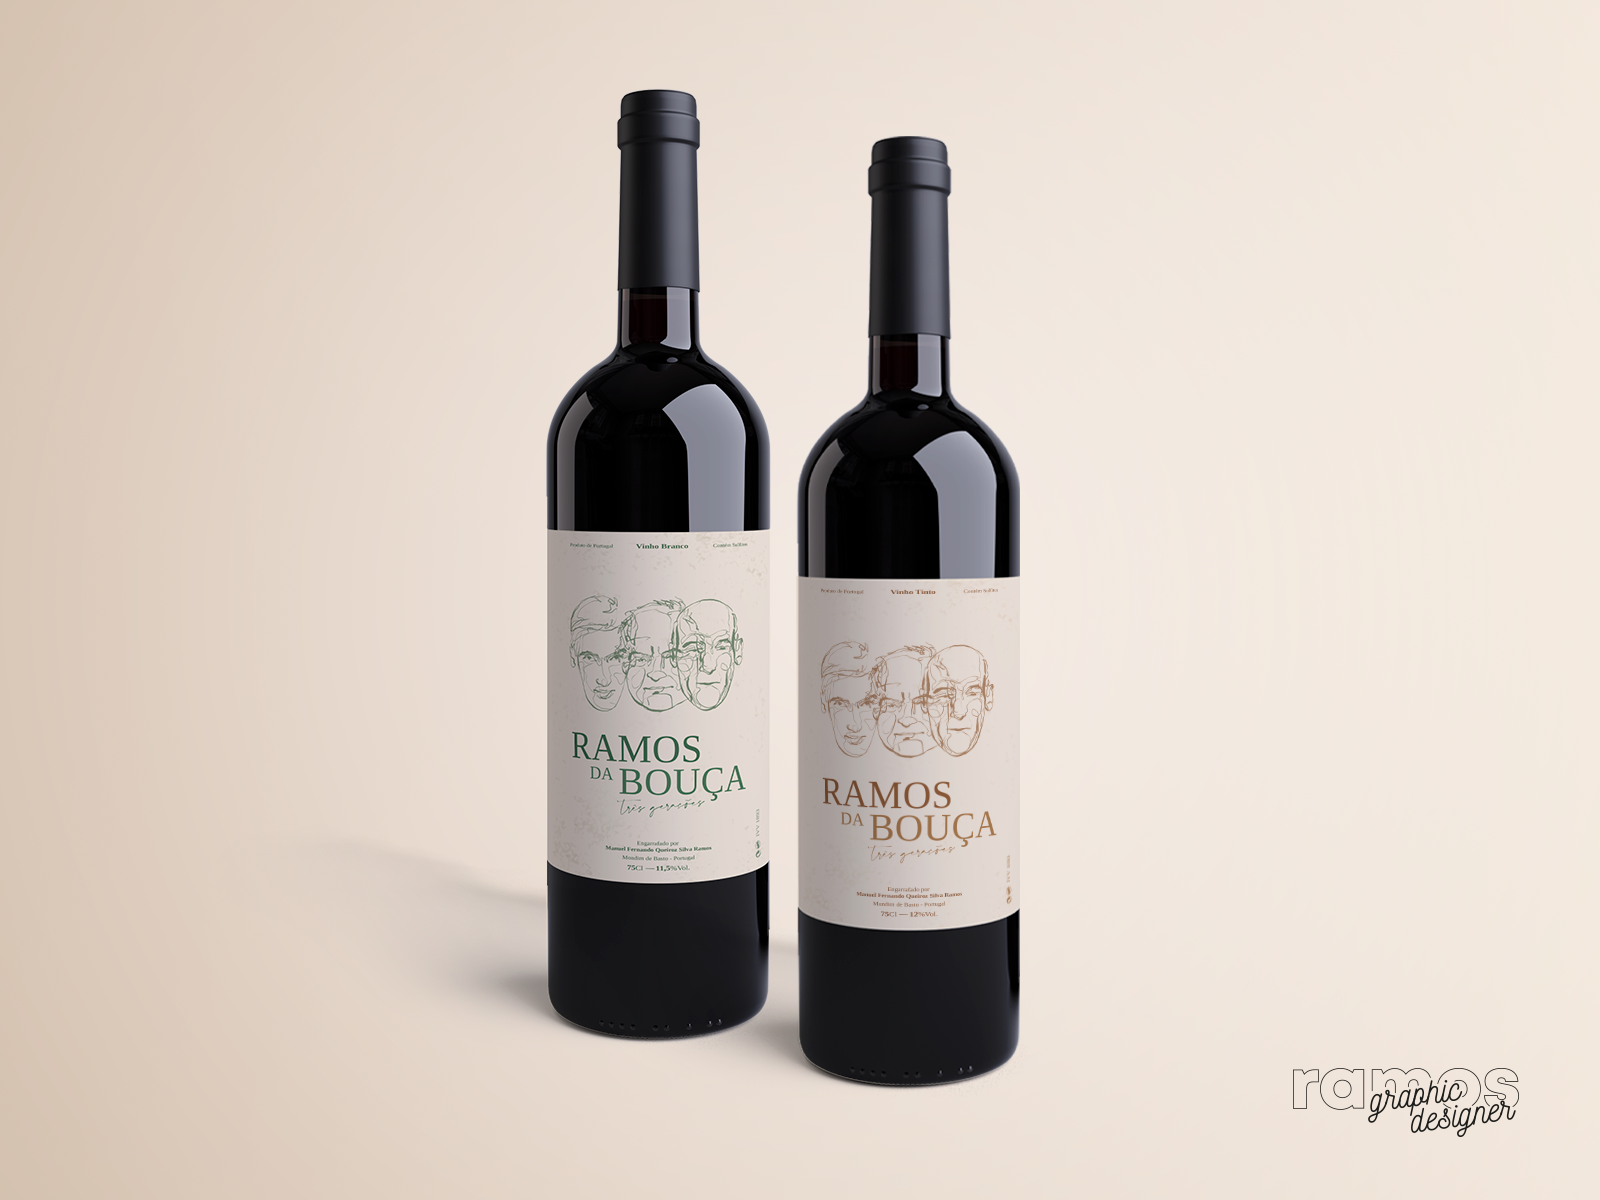 Wine Label - Ramos da Bouça content design graphicdesign illustration label design label packaging wine label